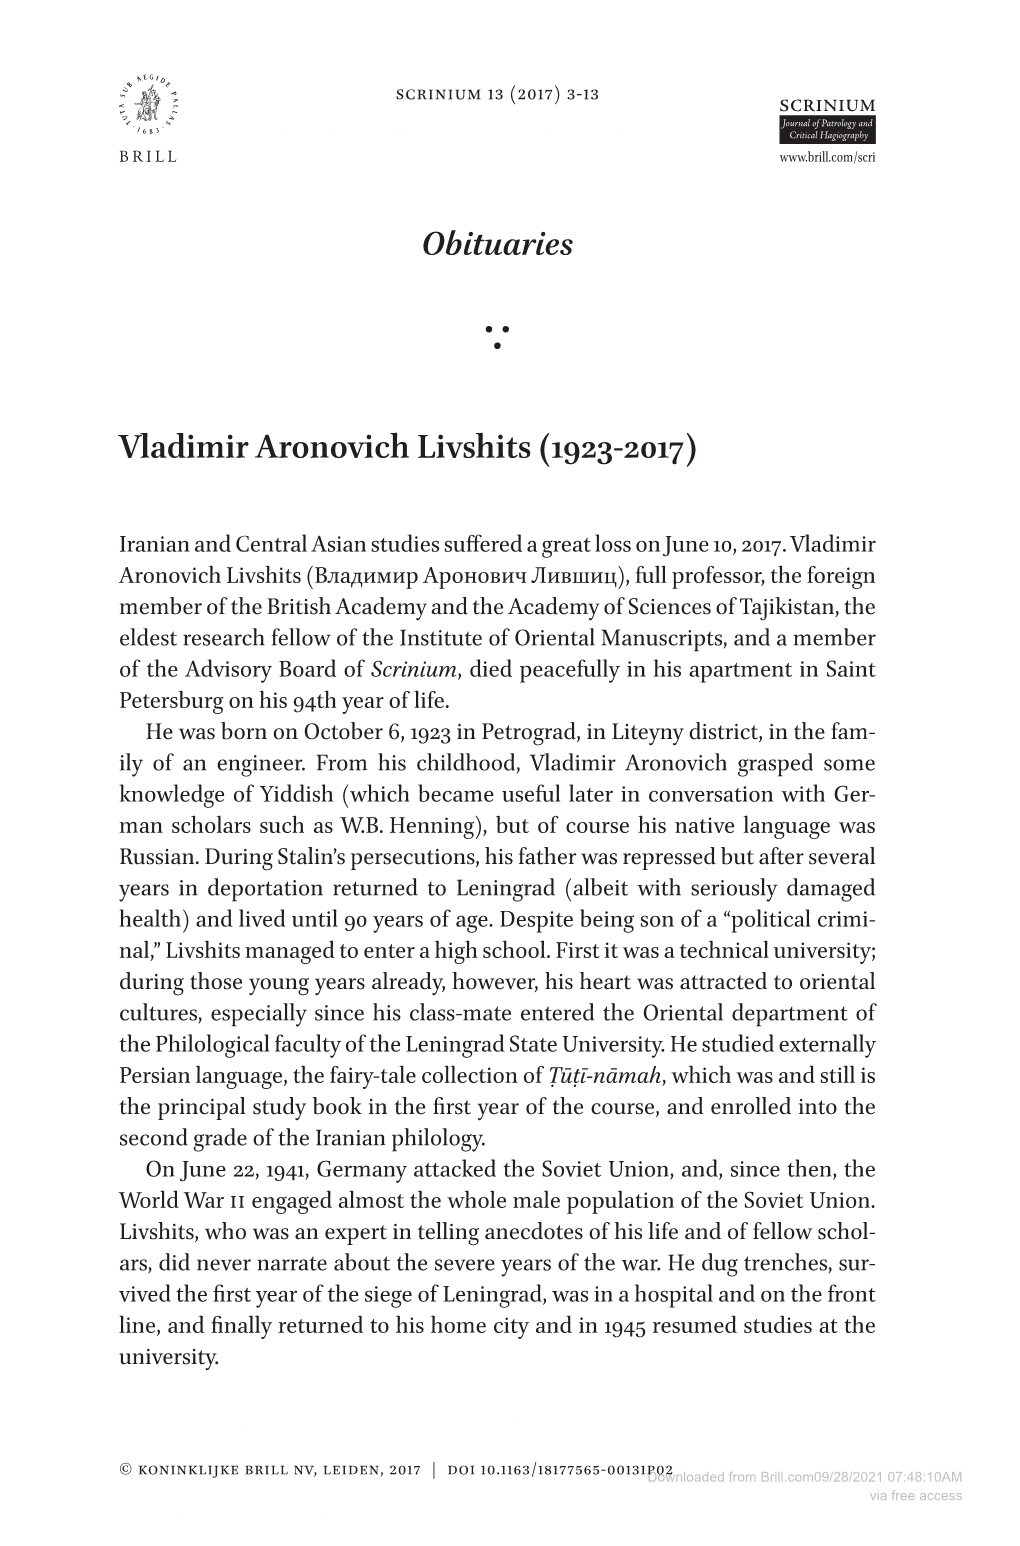 Obituaries Vladimir Aronovich Livshits